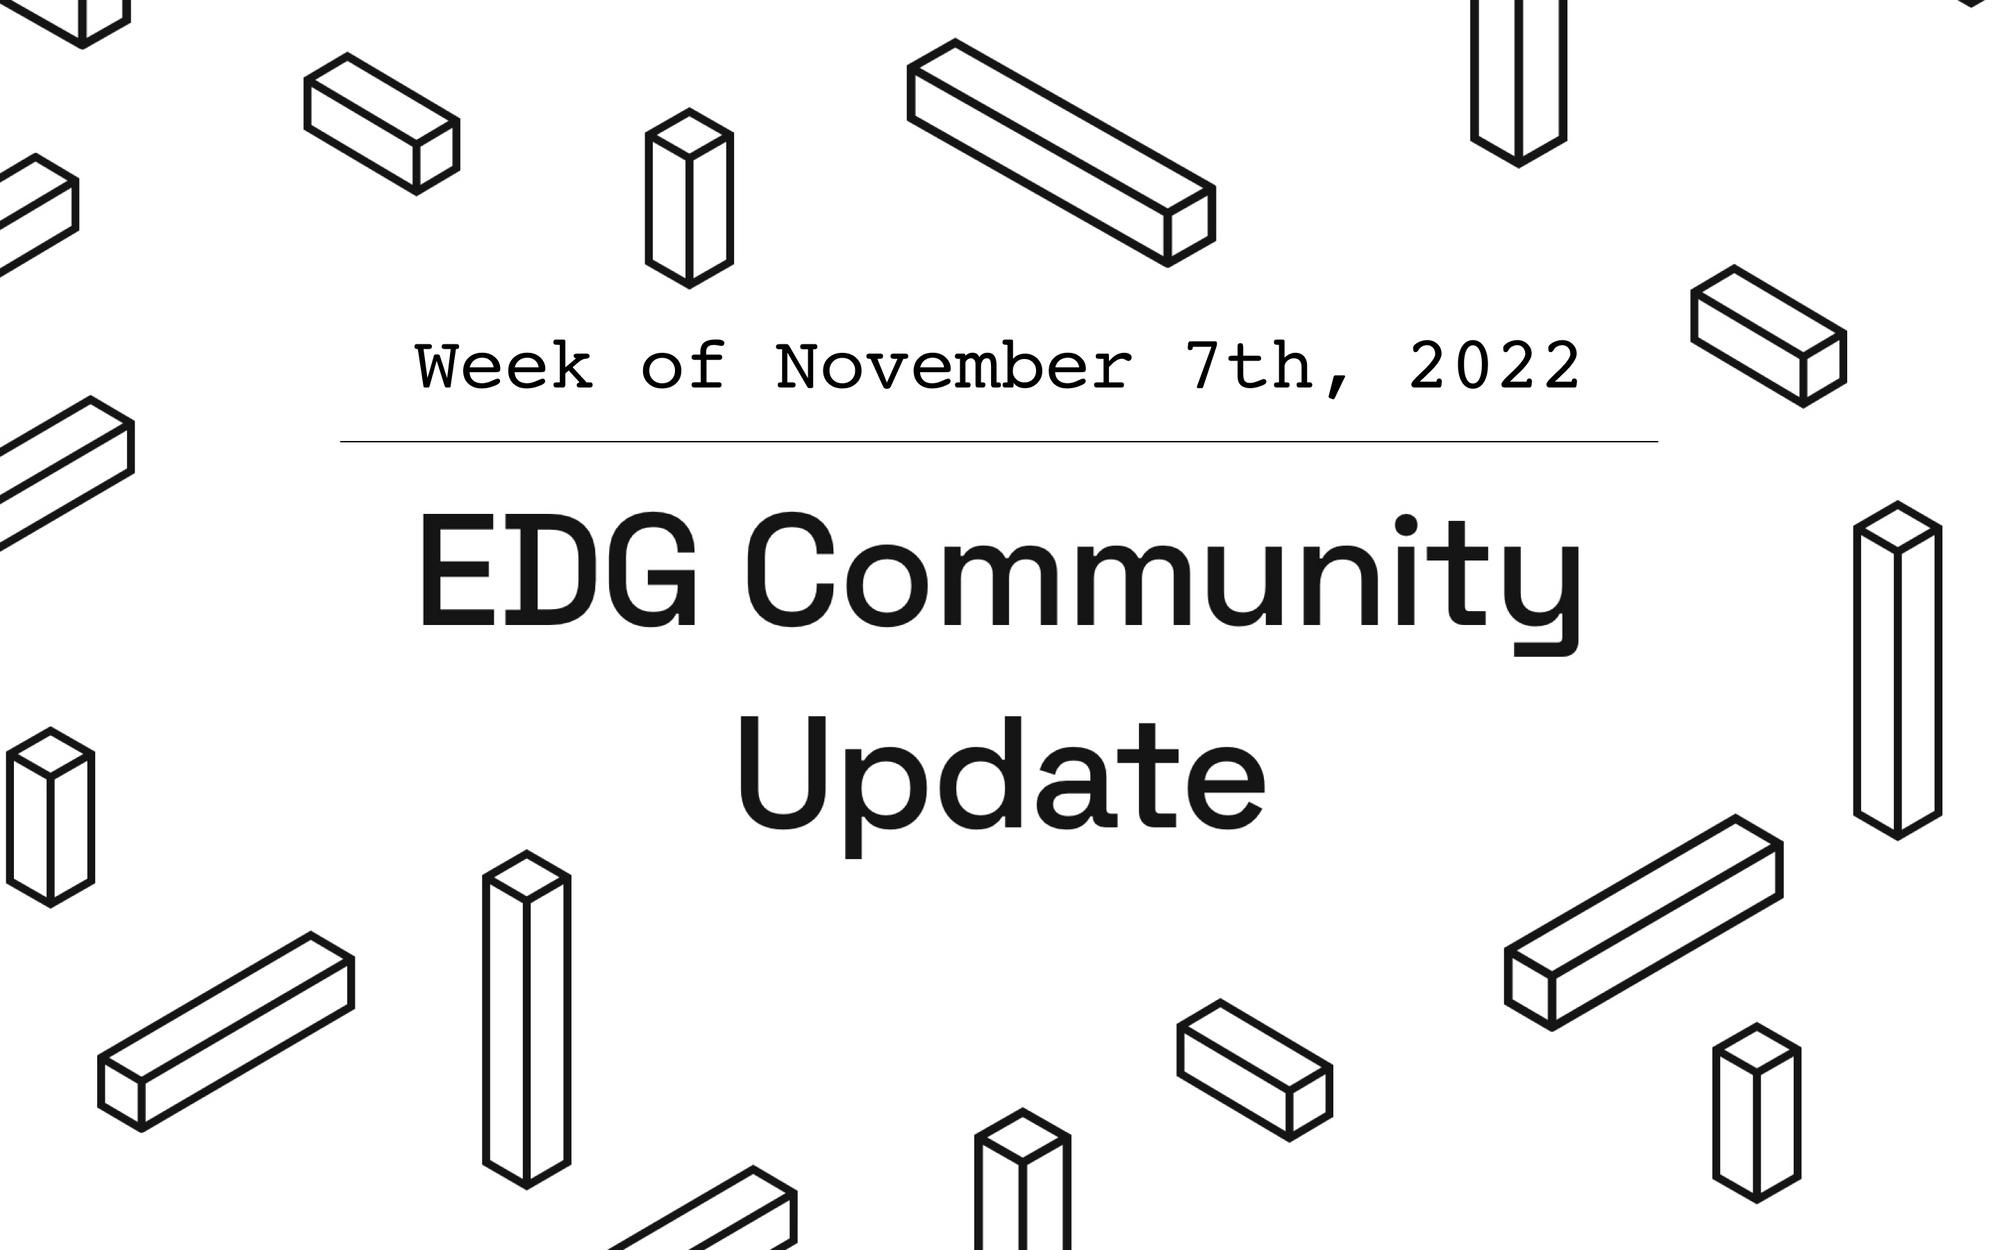 EDG Community Update: Week of November 7th, 2022